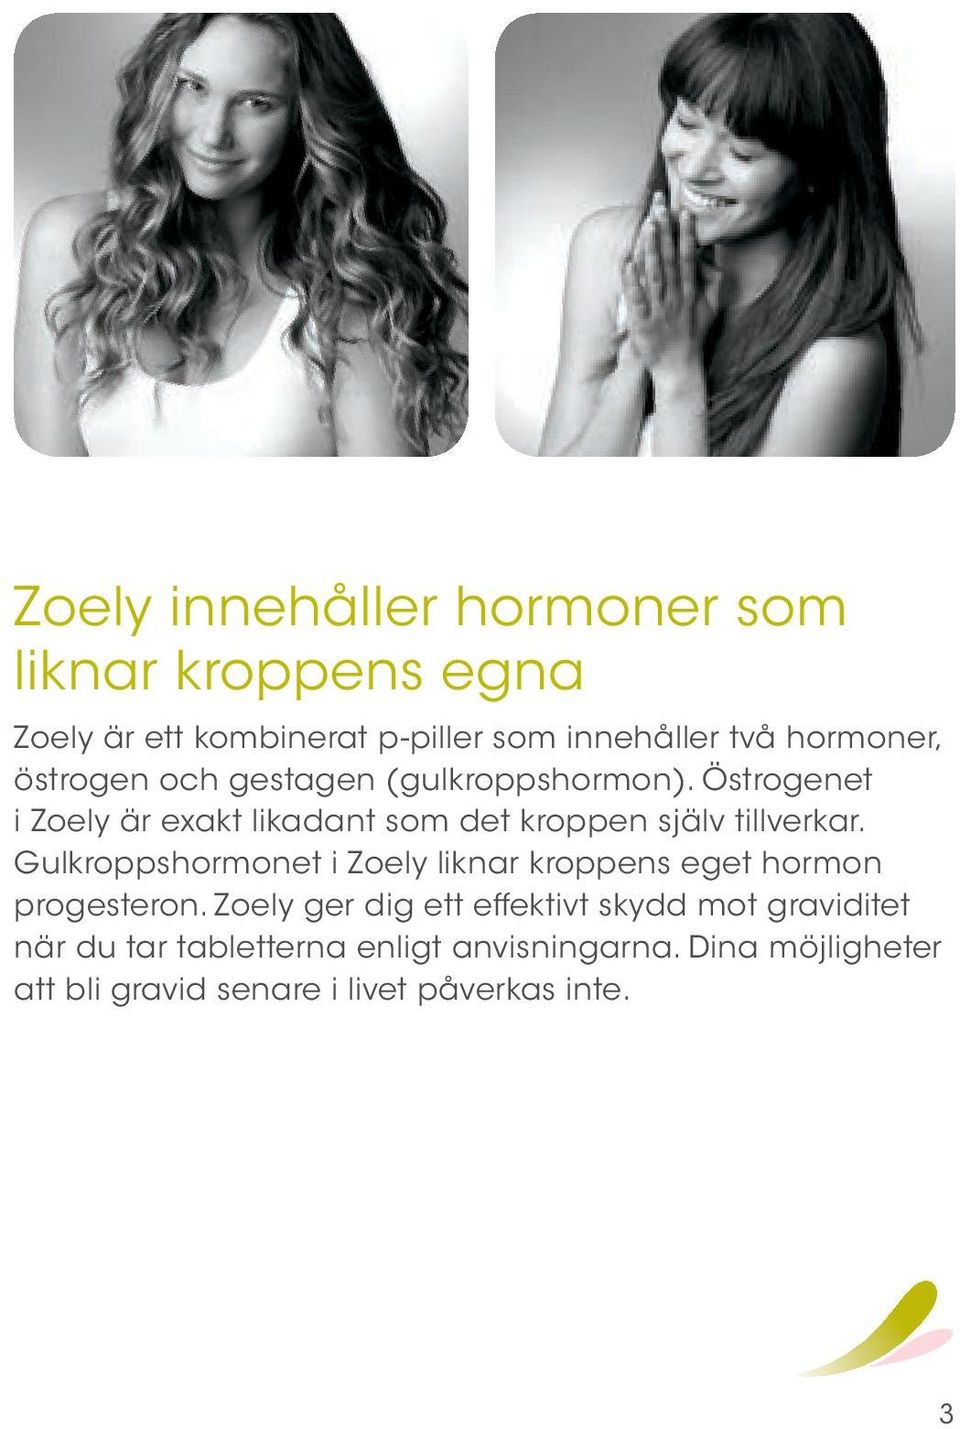 Gulkroppshormonet i Zoely liknar kroppens eget hormon progesteron.